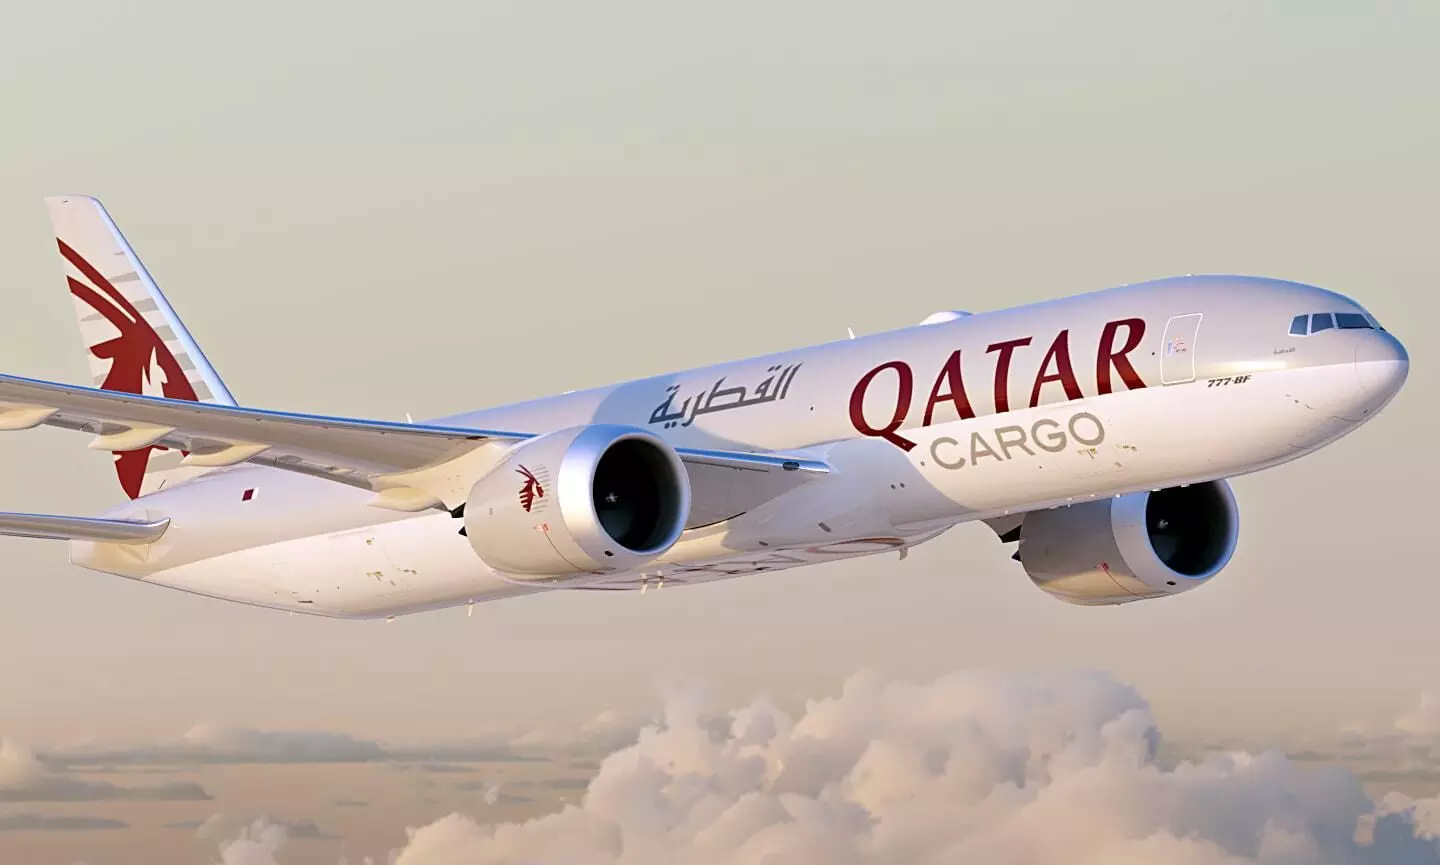 WebCargo enables interline booking between ITA Airways, Qatar Cargo